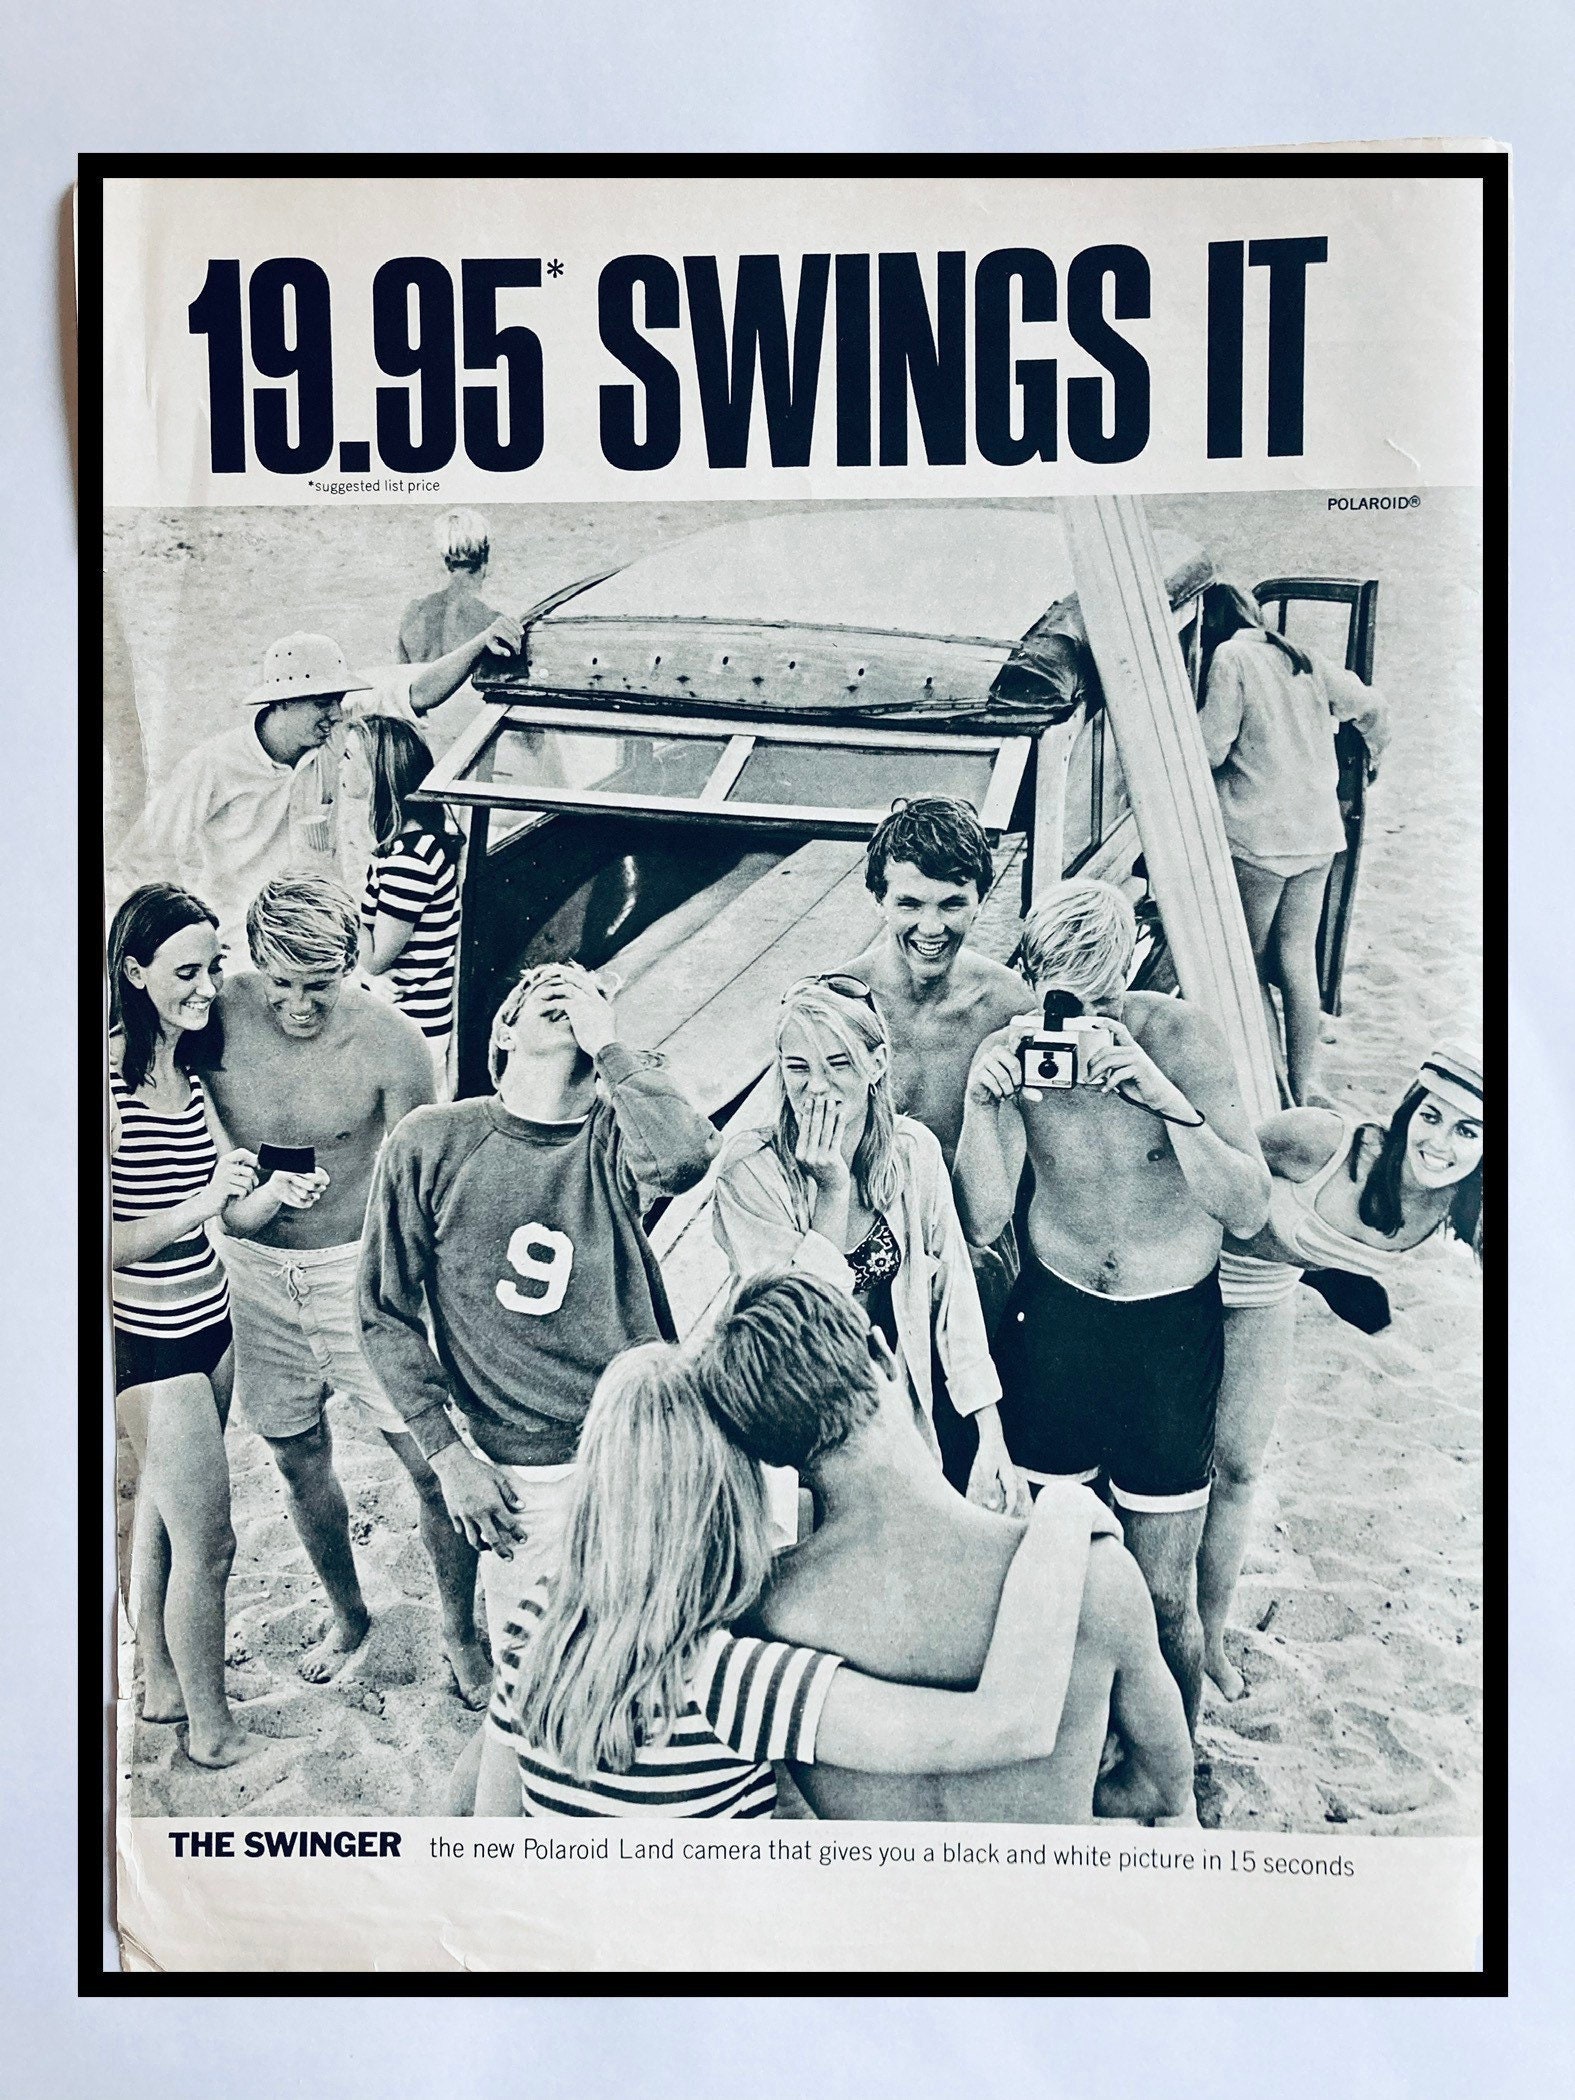 Vtg Polaroid Print Ad 1967 Swinger Camera 19.95 Swings It pic